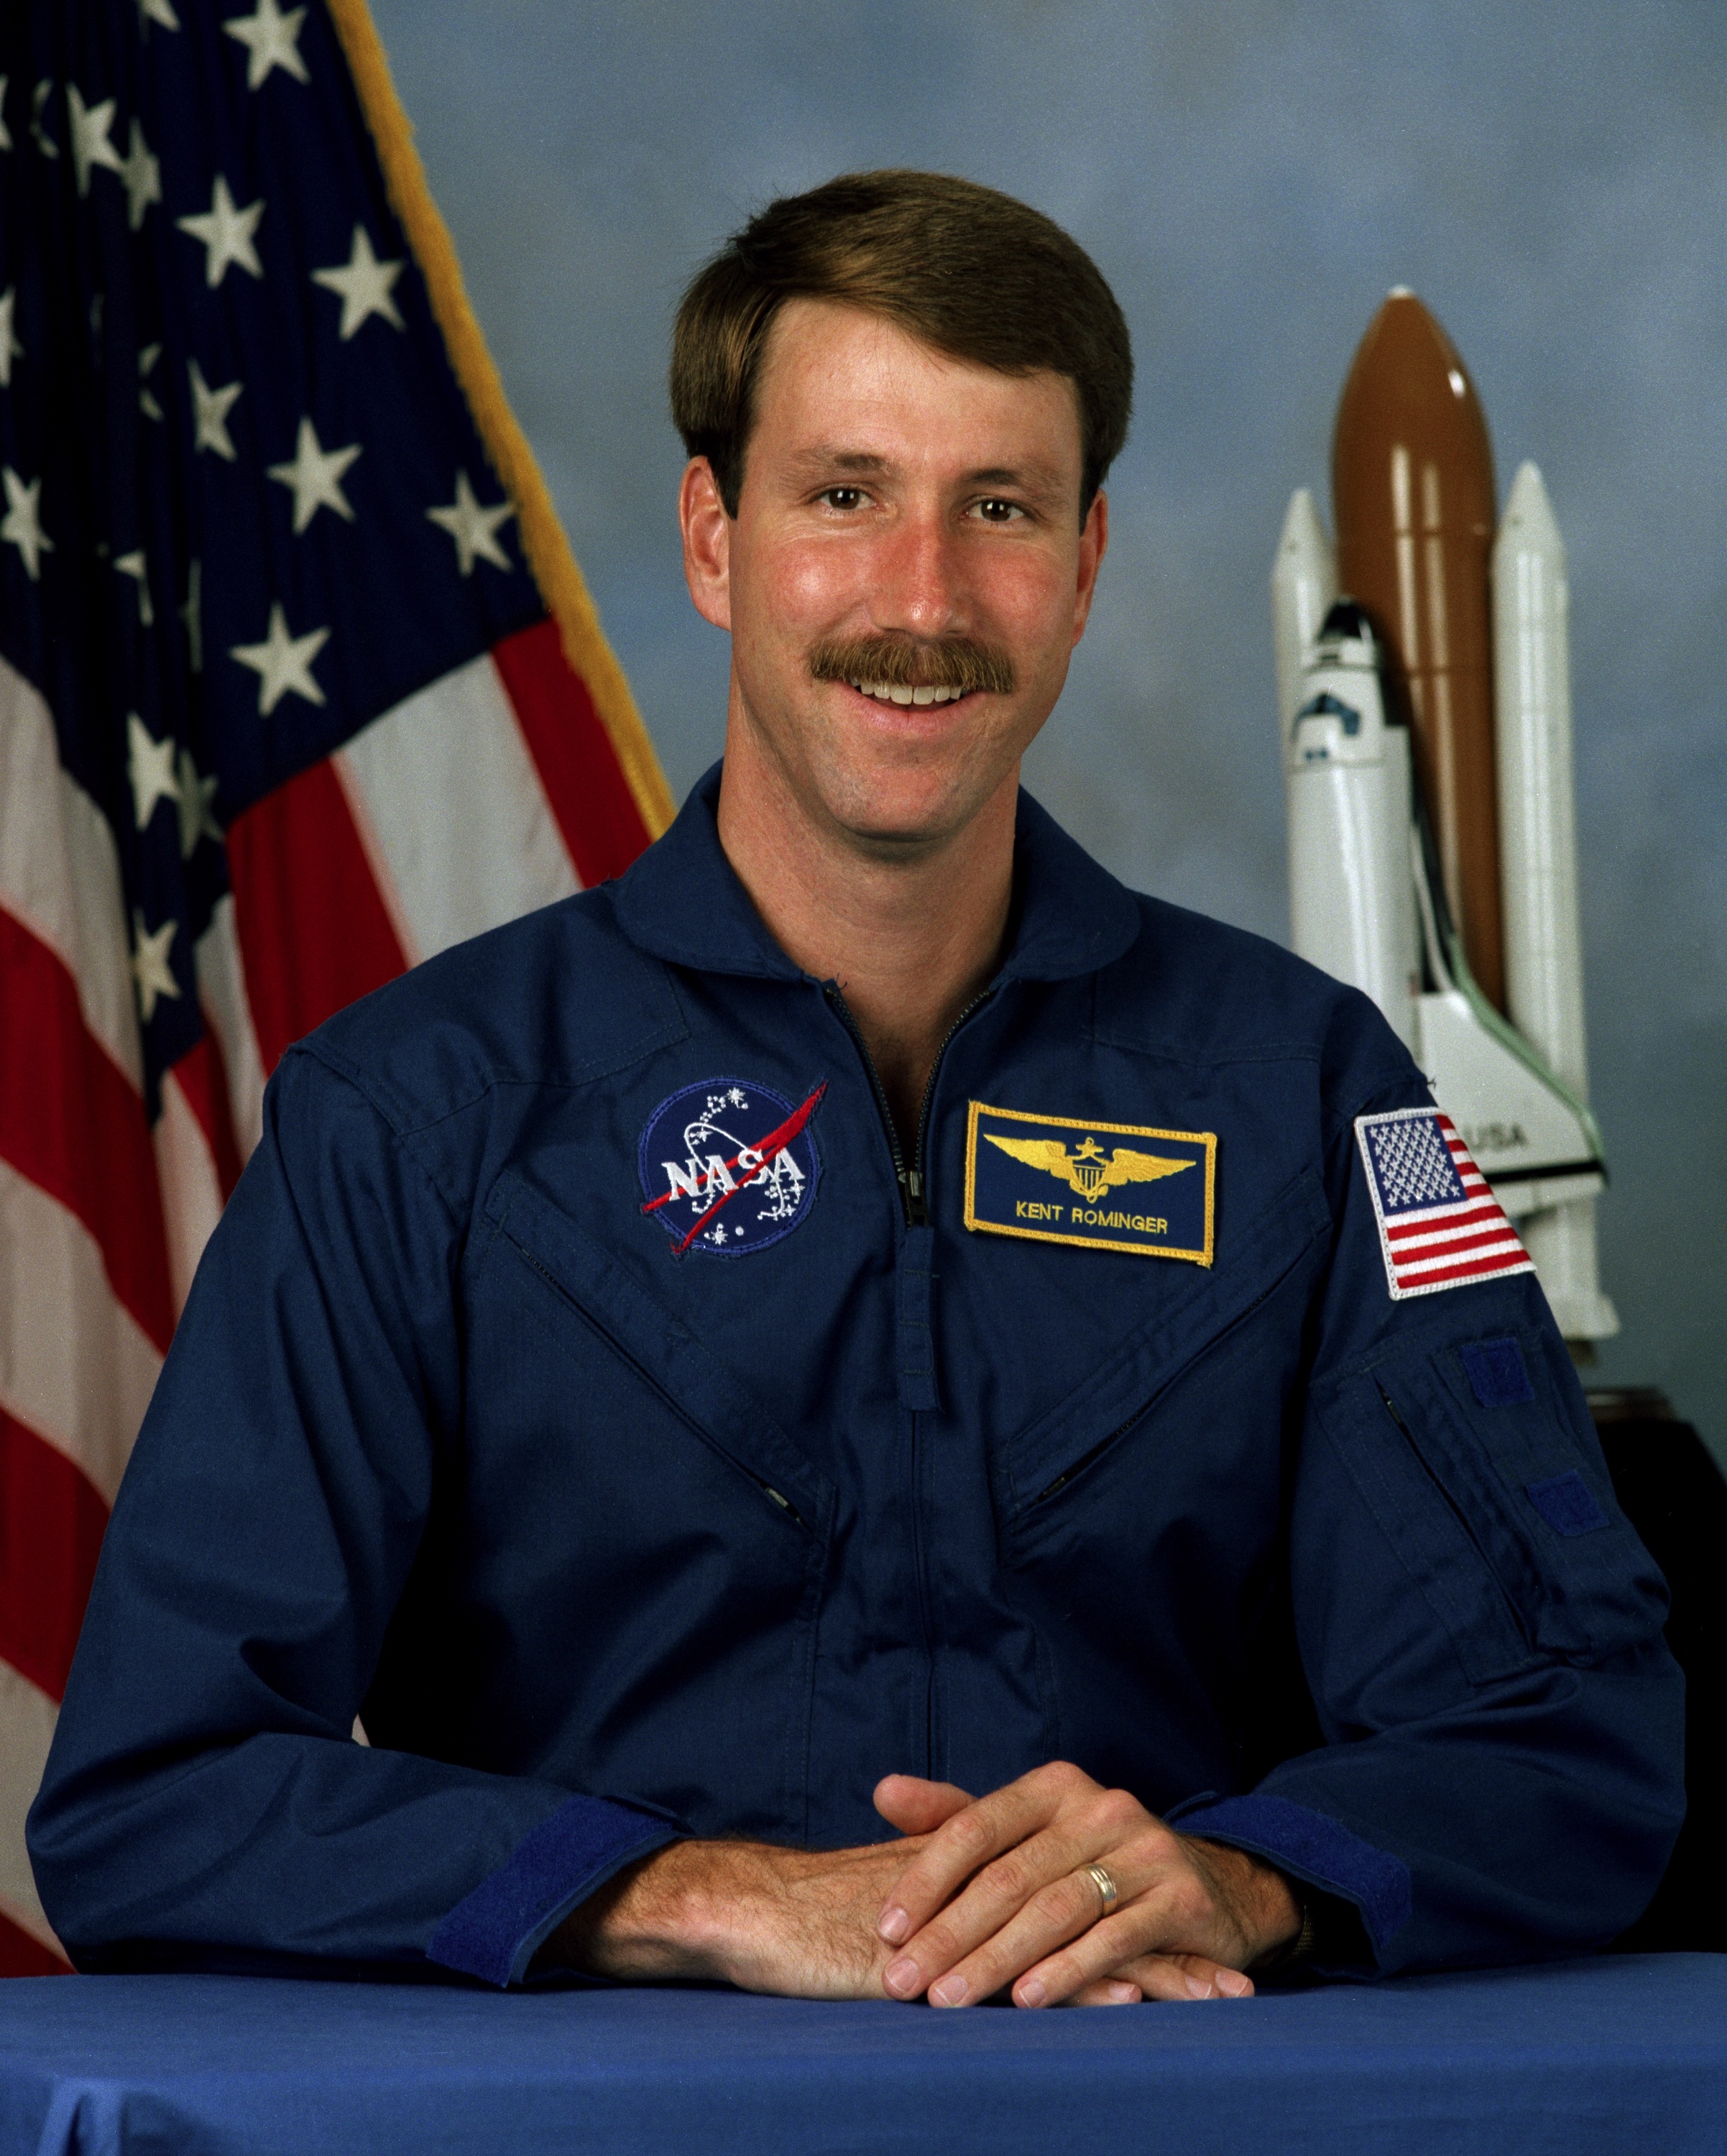 NASA Astronaut Kent Rominger